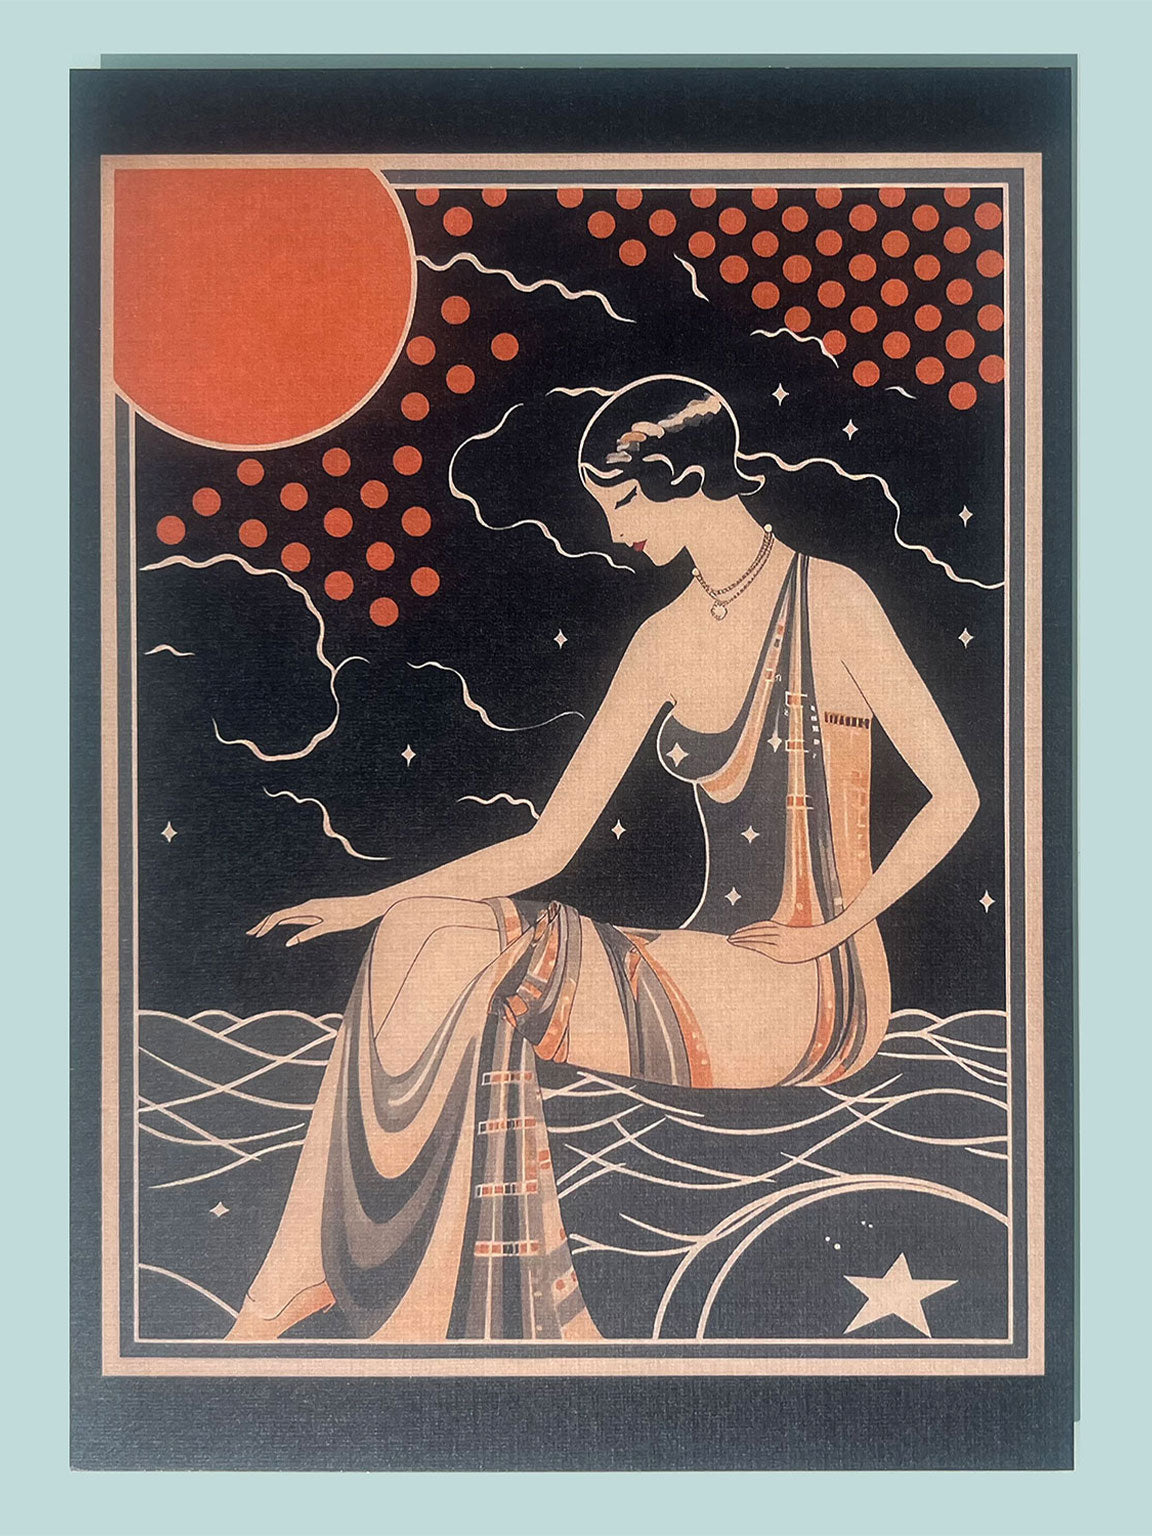 5x7" Postcard Art Card Size: Black and orange colors, Roaring 20s Art Deco Flapper, Vintage Illustration Design, Eclectic Mod Boho Art, Lux Chic Fashion, Lunar Moon Stars, Galaxy, Zodiac